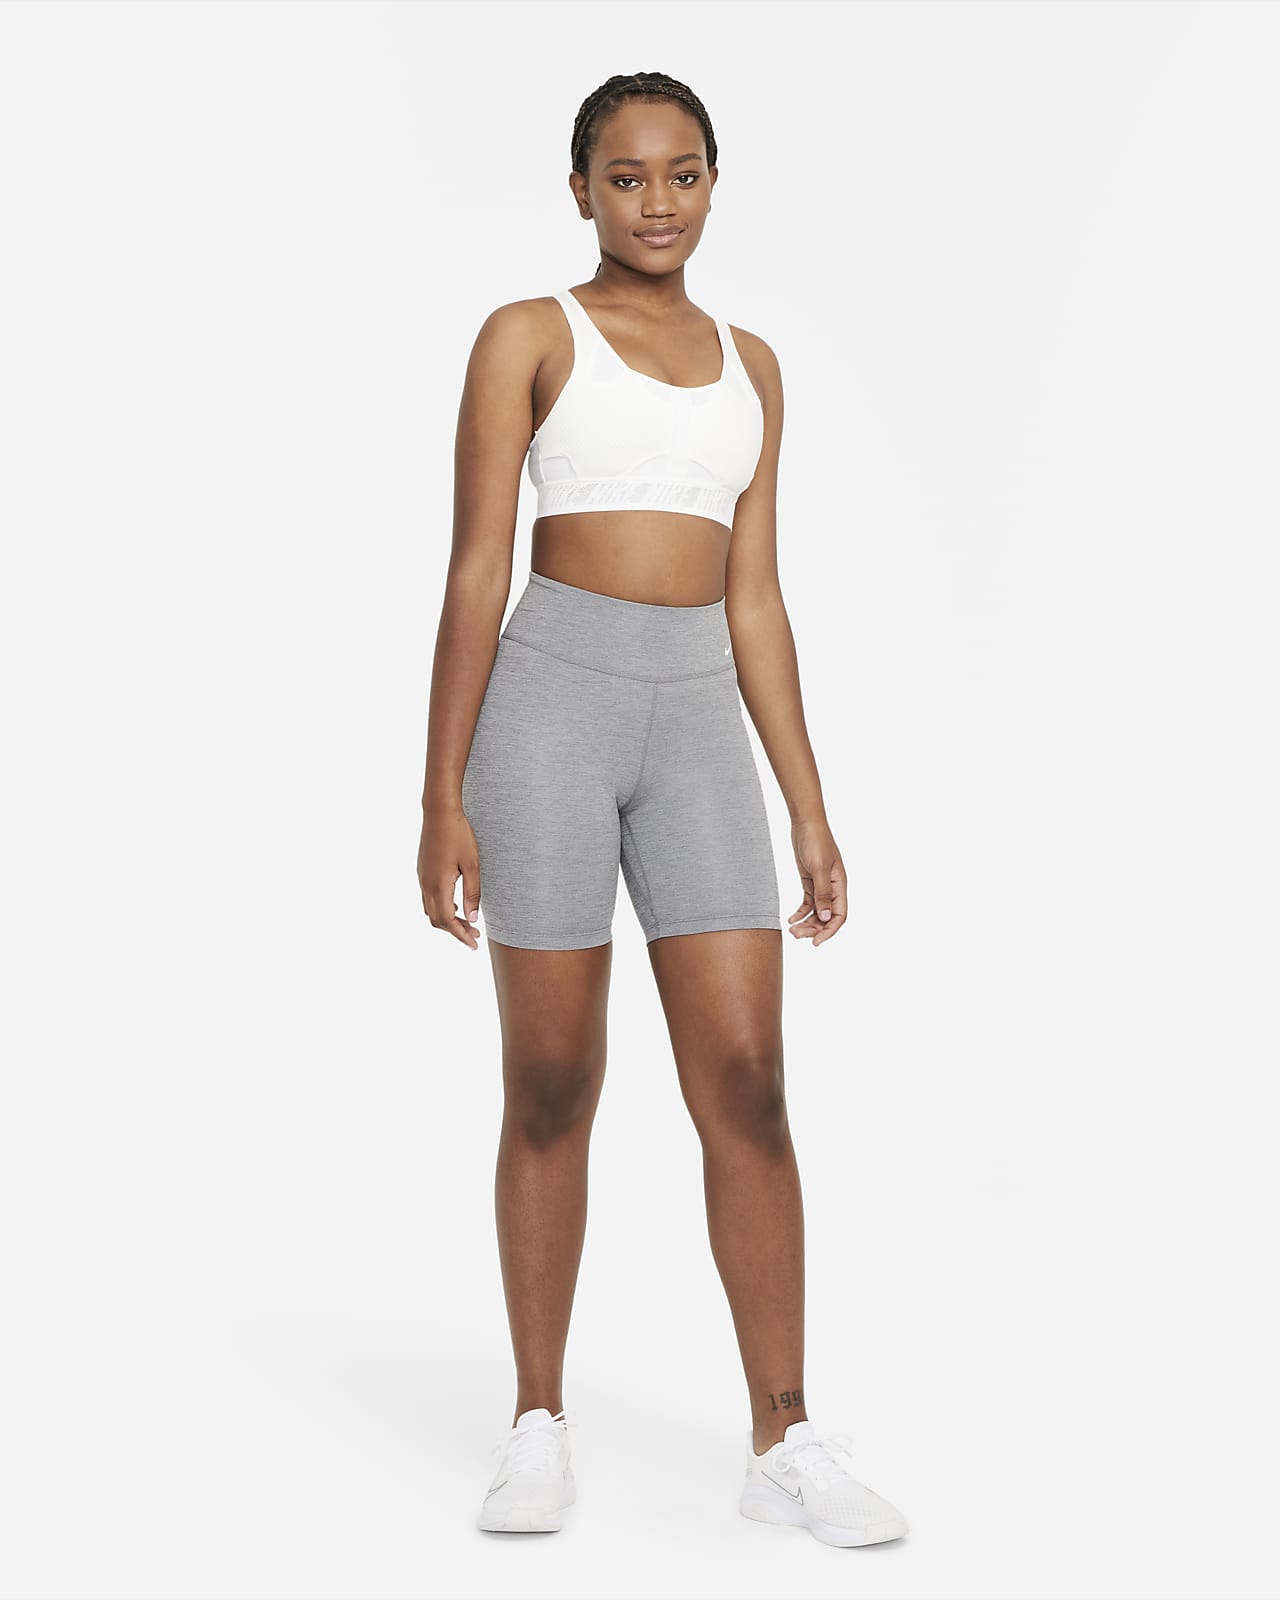 Nike Women's Dri-FIT One High-Waisted 7 Inch Biker Shorts